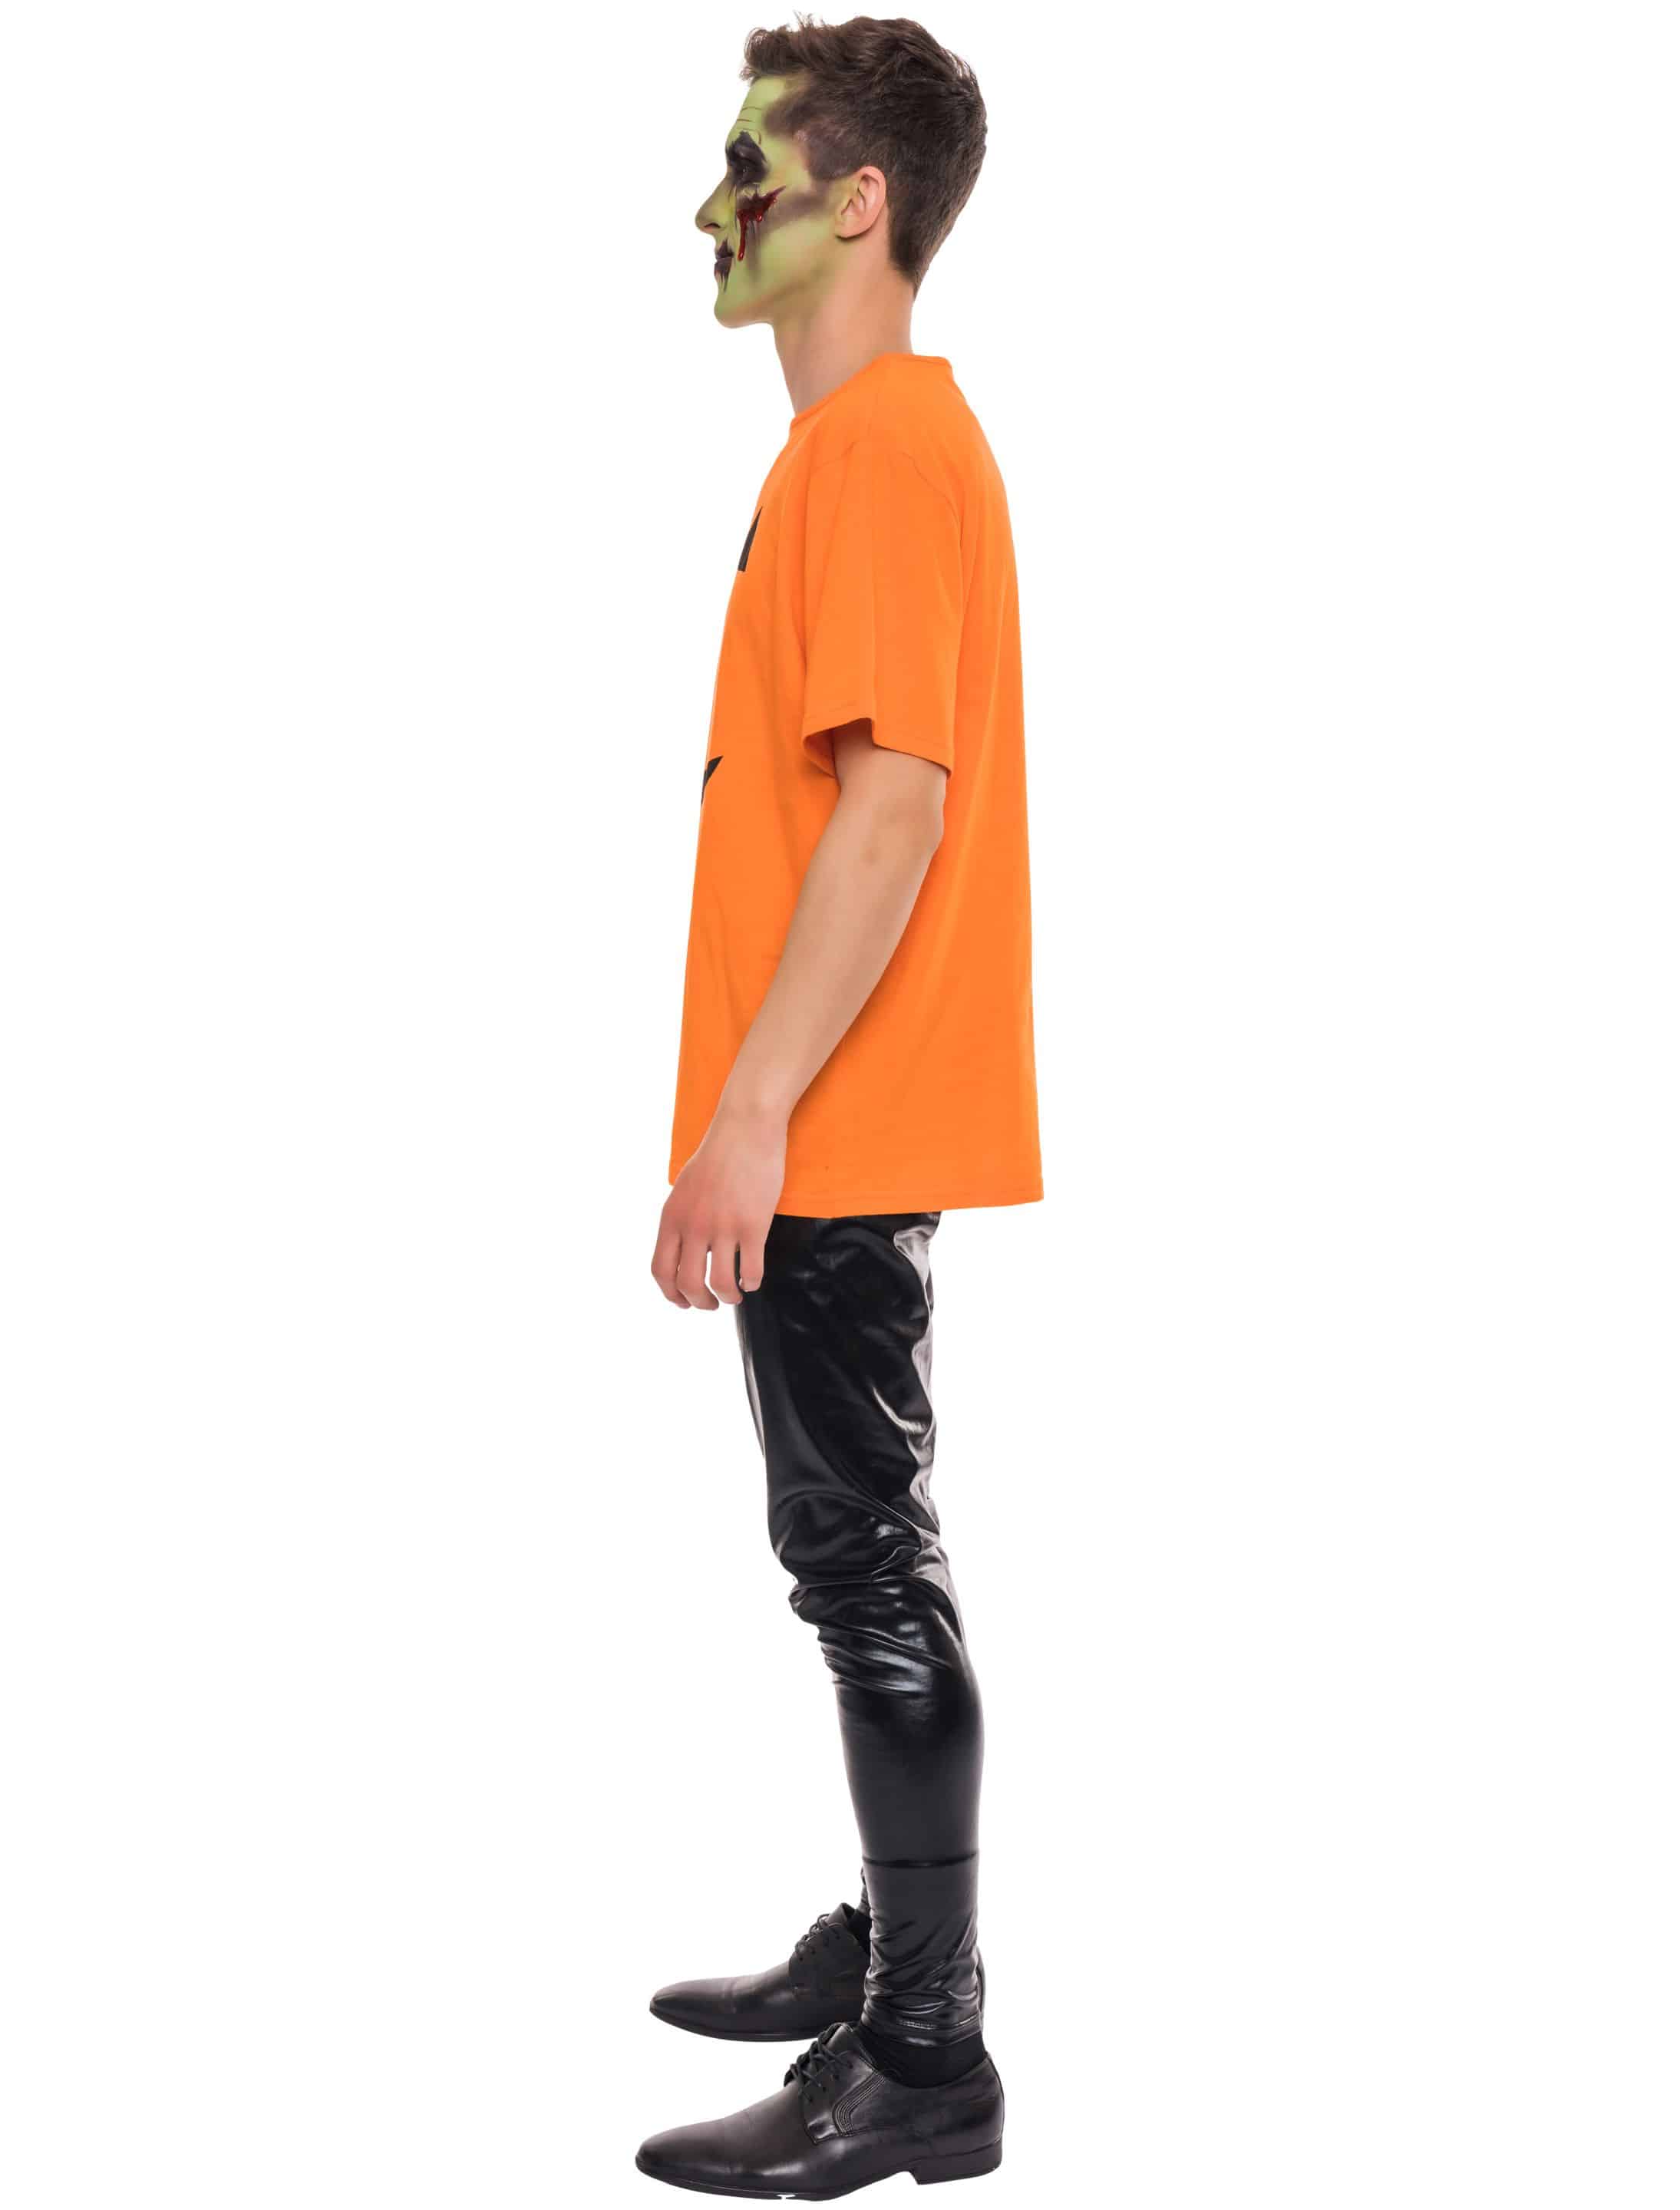 T-Shirt Halloween Kürbis orange S/M